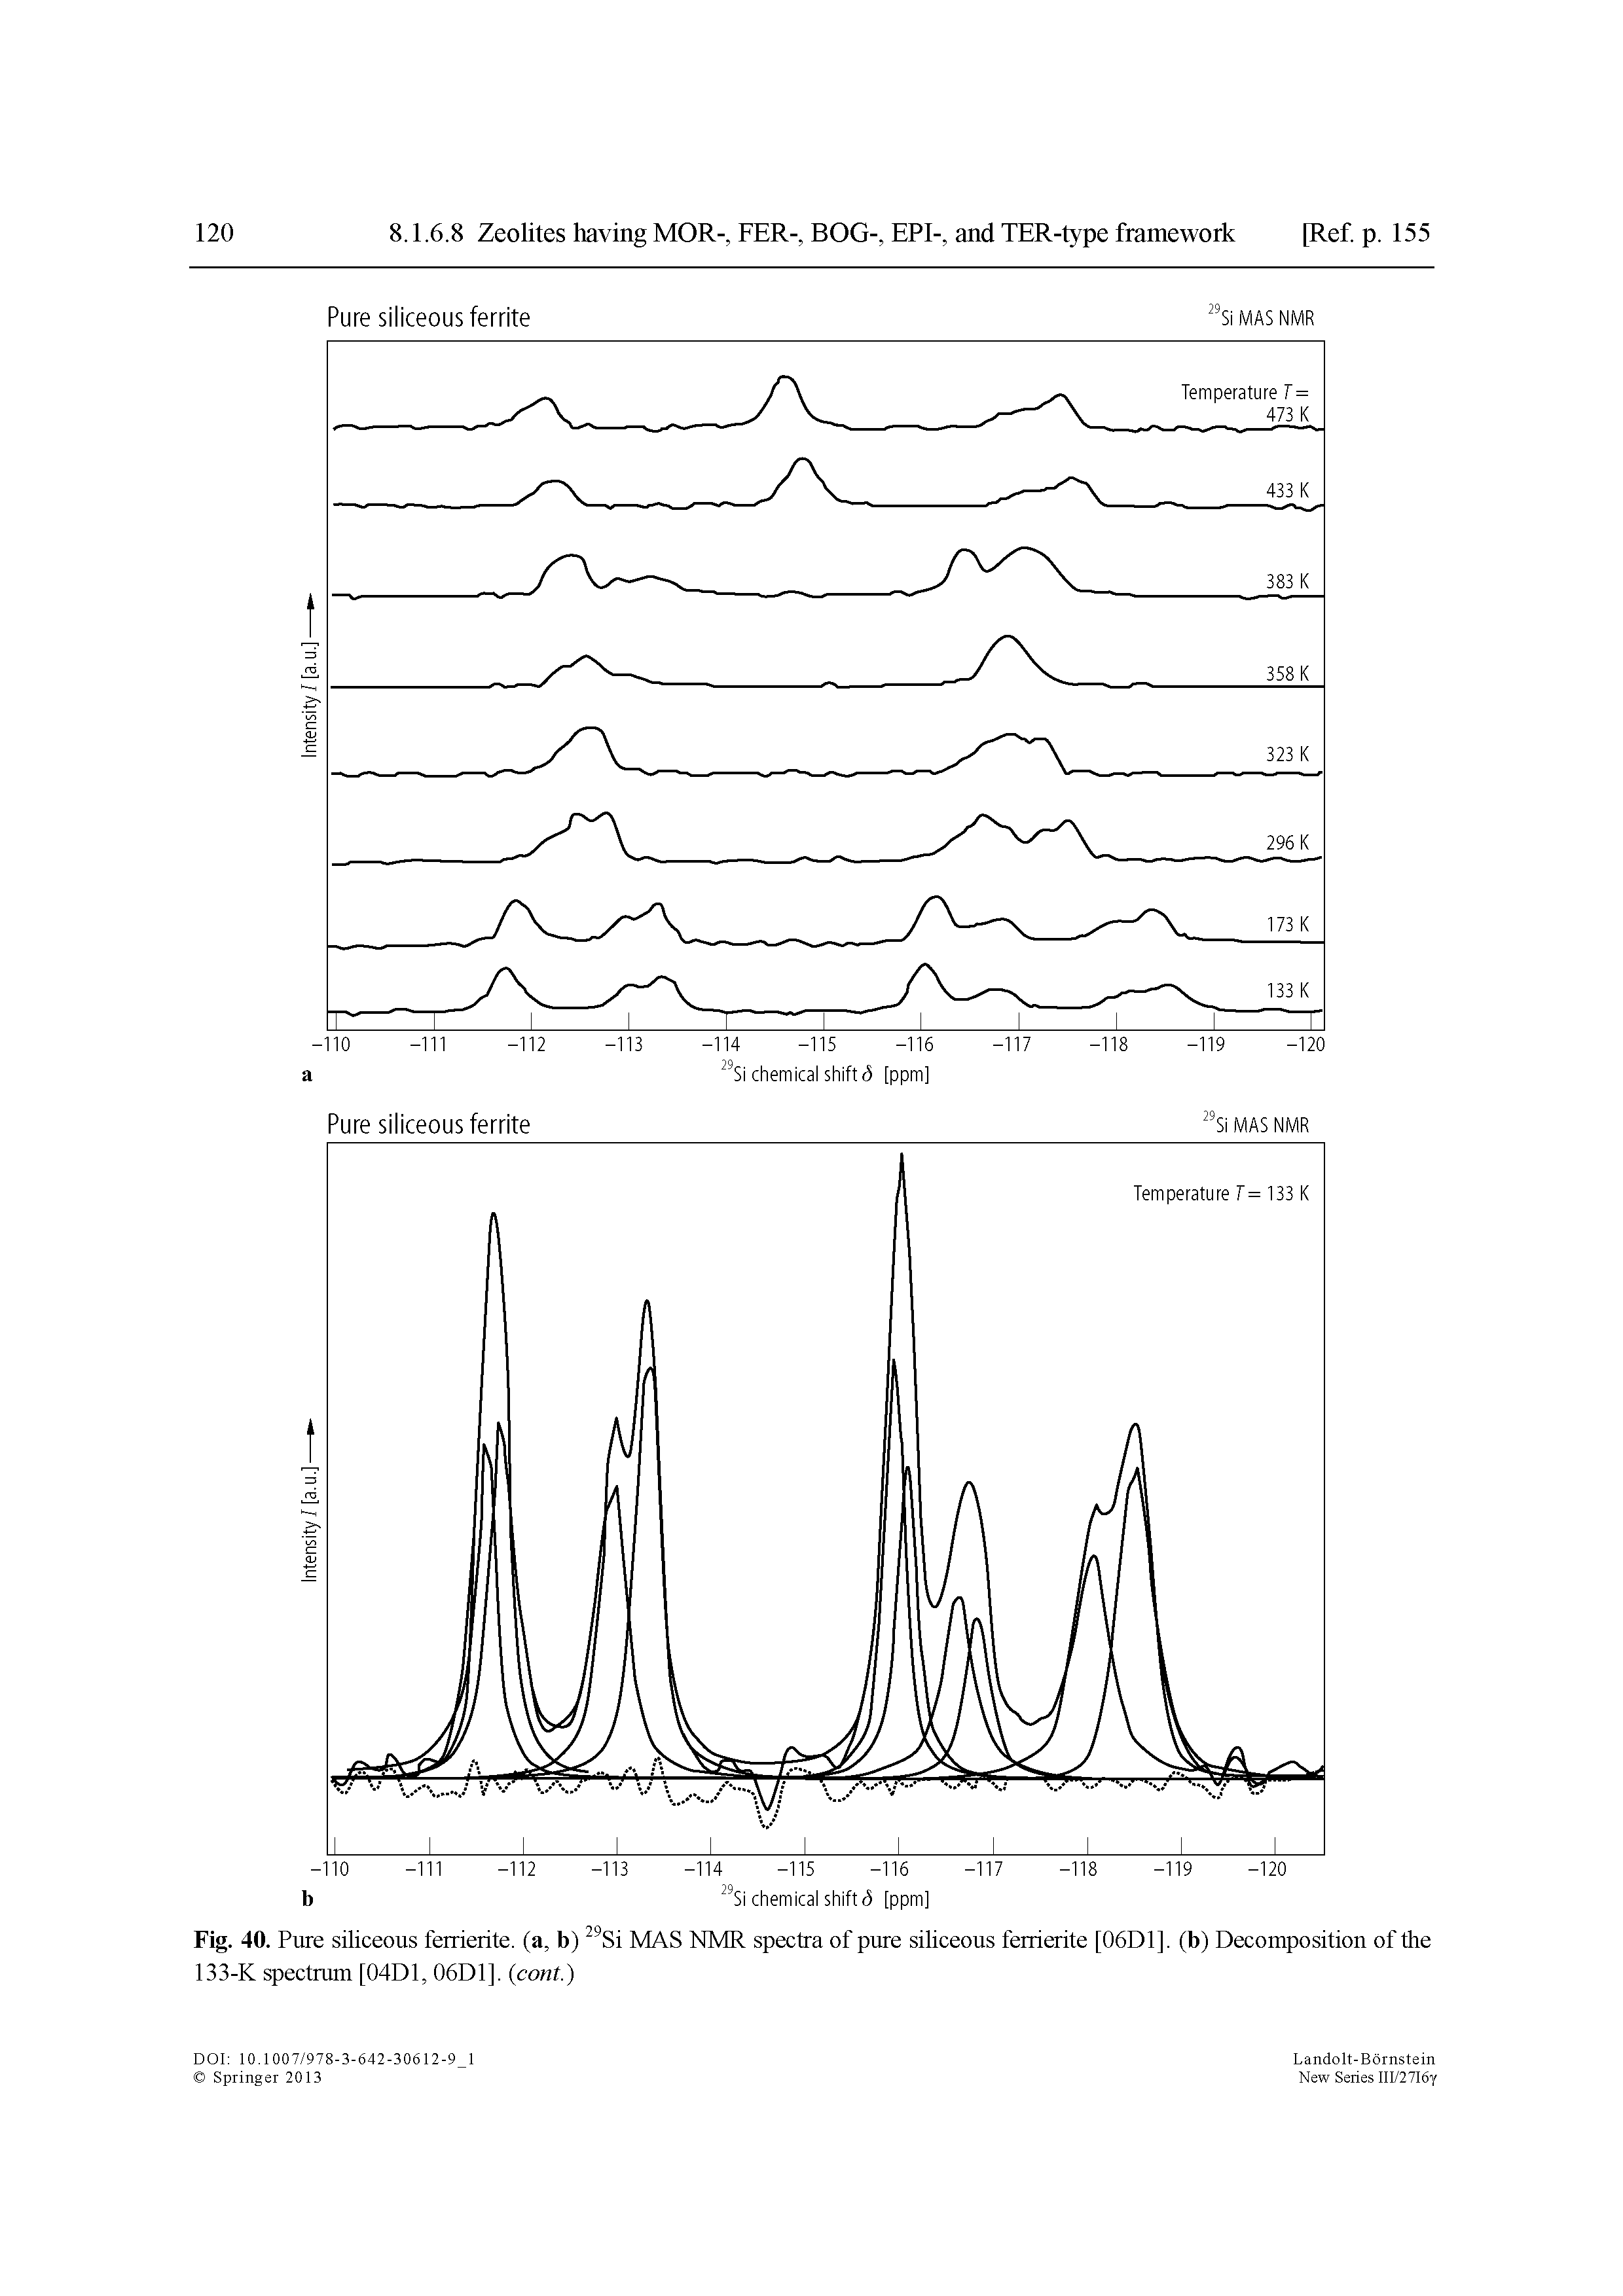 Fig. 40. Pure siliceous ferrierite. (a, b) Si MAS NMR spectra of pure siliceous ferrierite [06D1], (b) Decomposition of the 133-K spectrum [04D1, 06D1], (cont.)...